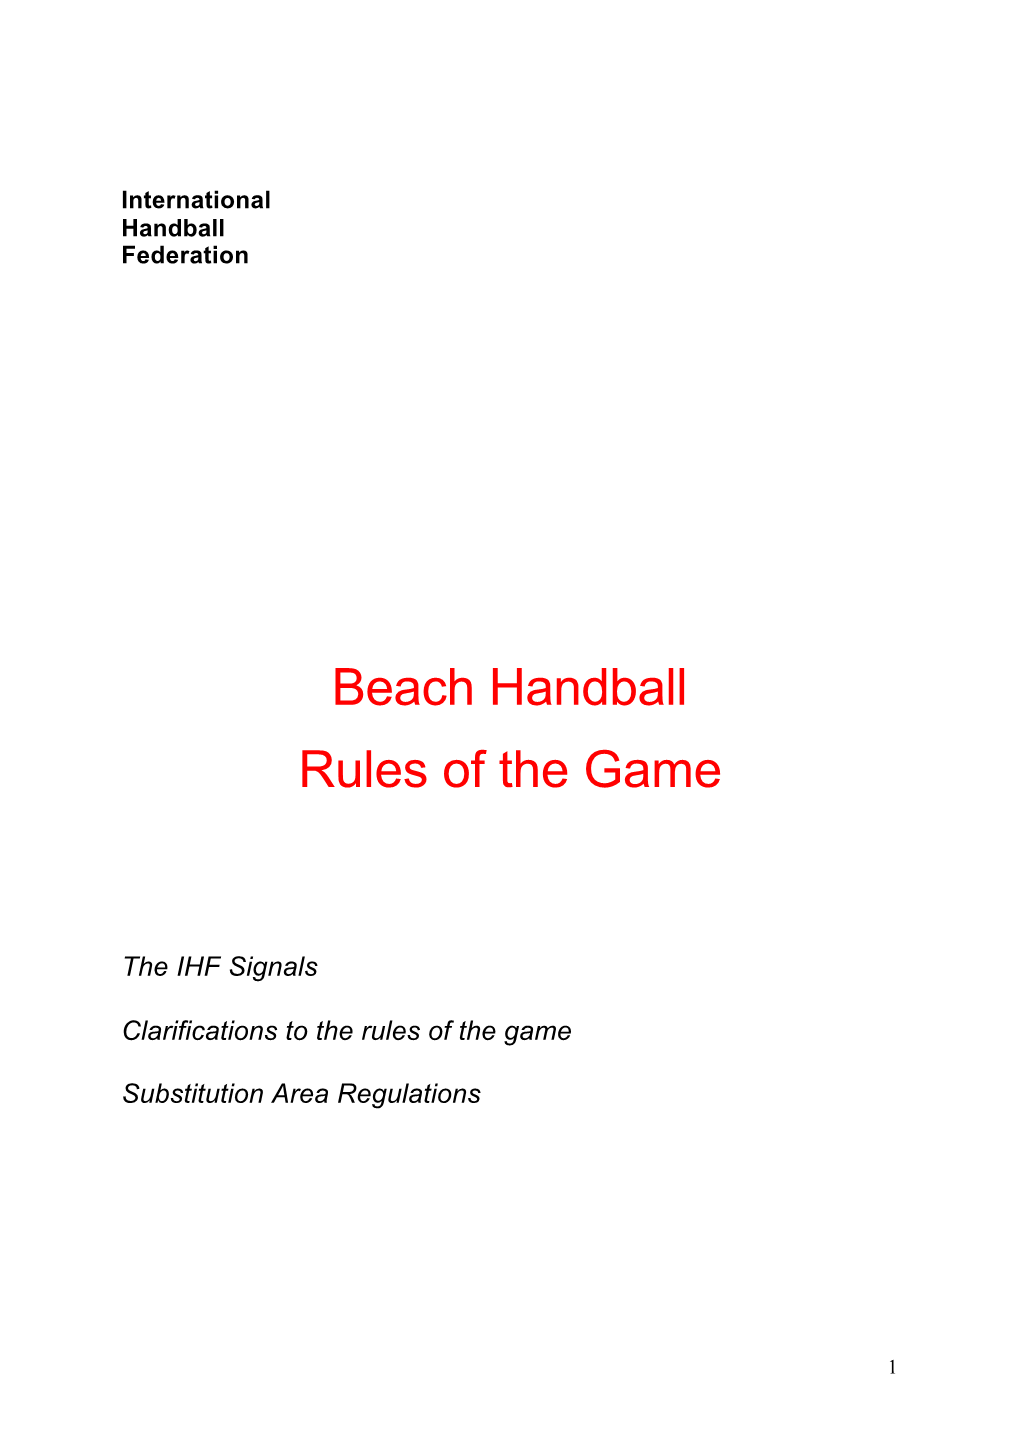 Beach Handball Rules of the Game